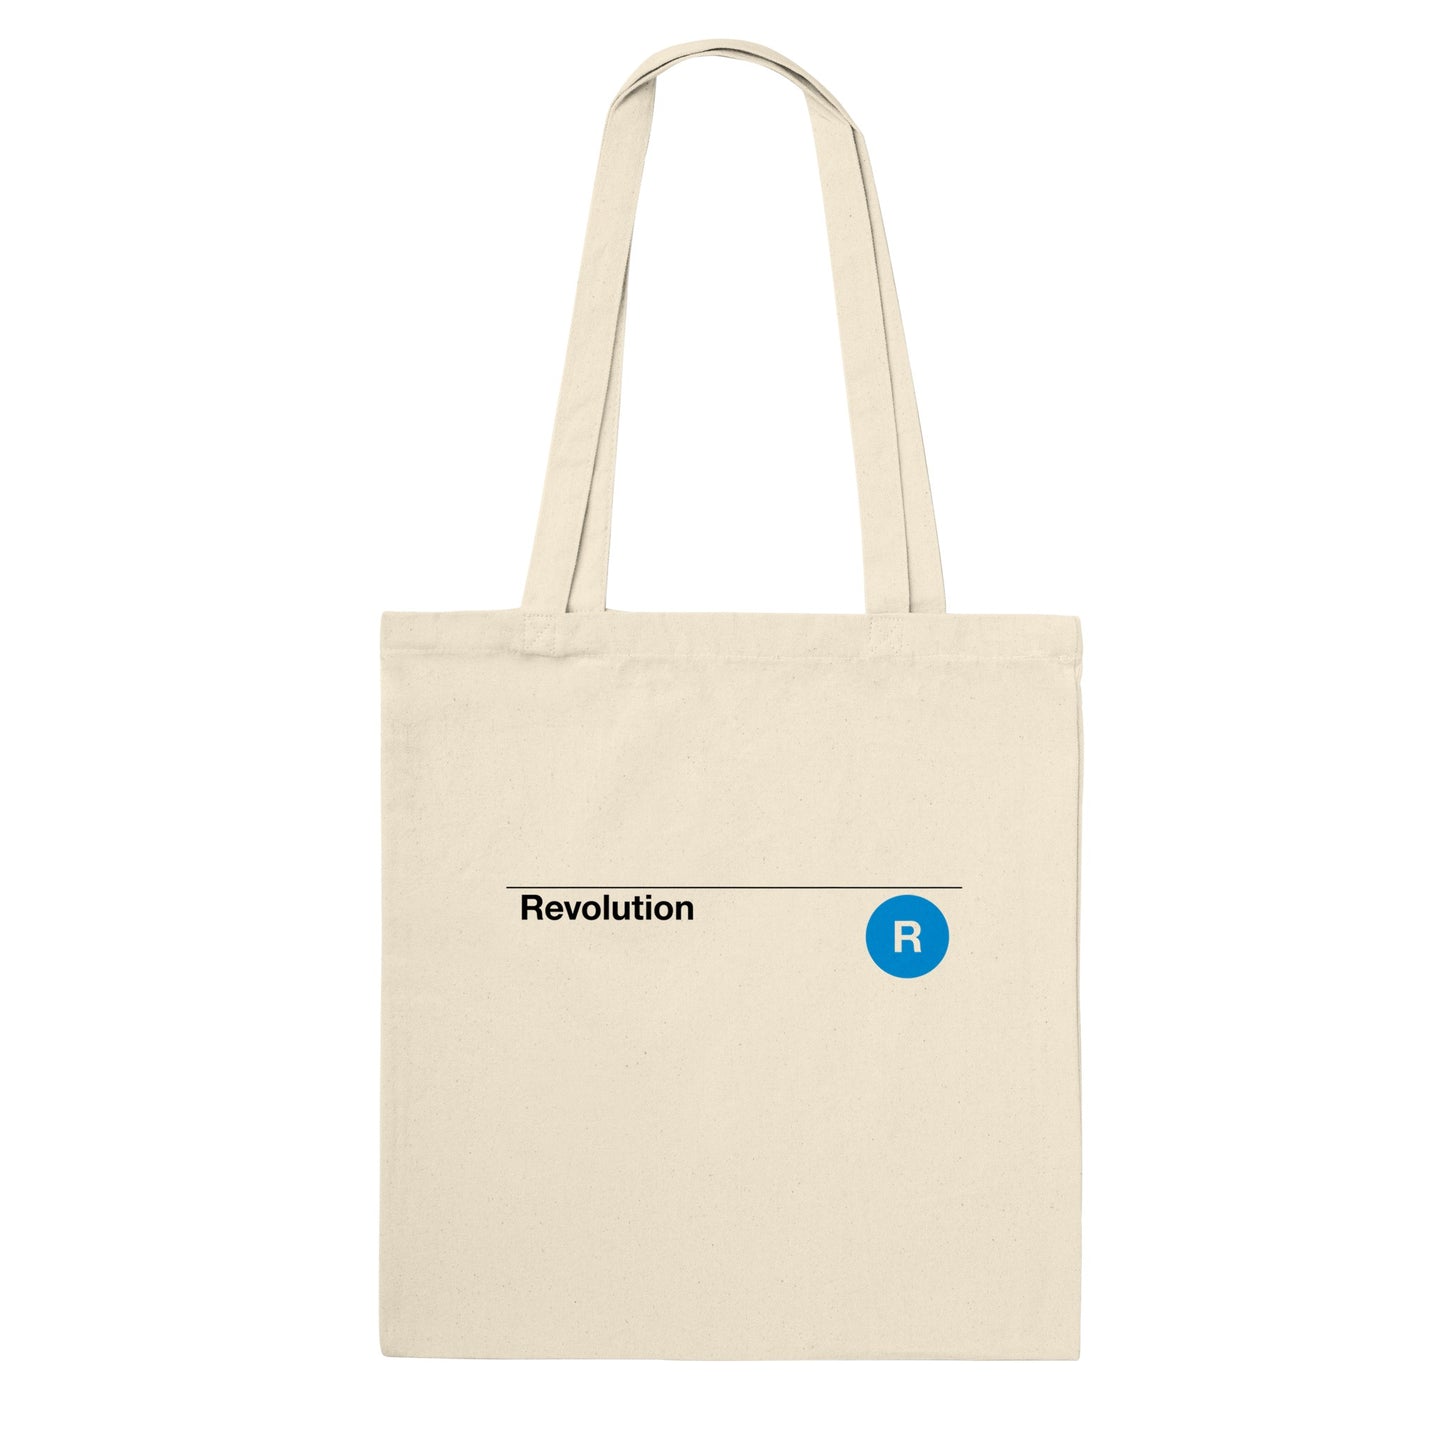 Revolution . Tote Bag Natural